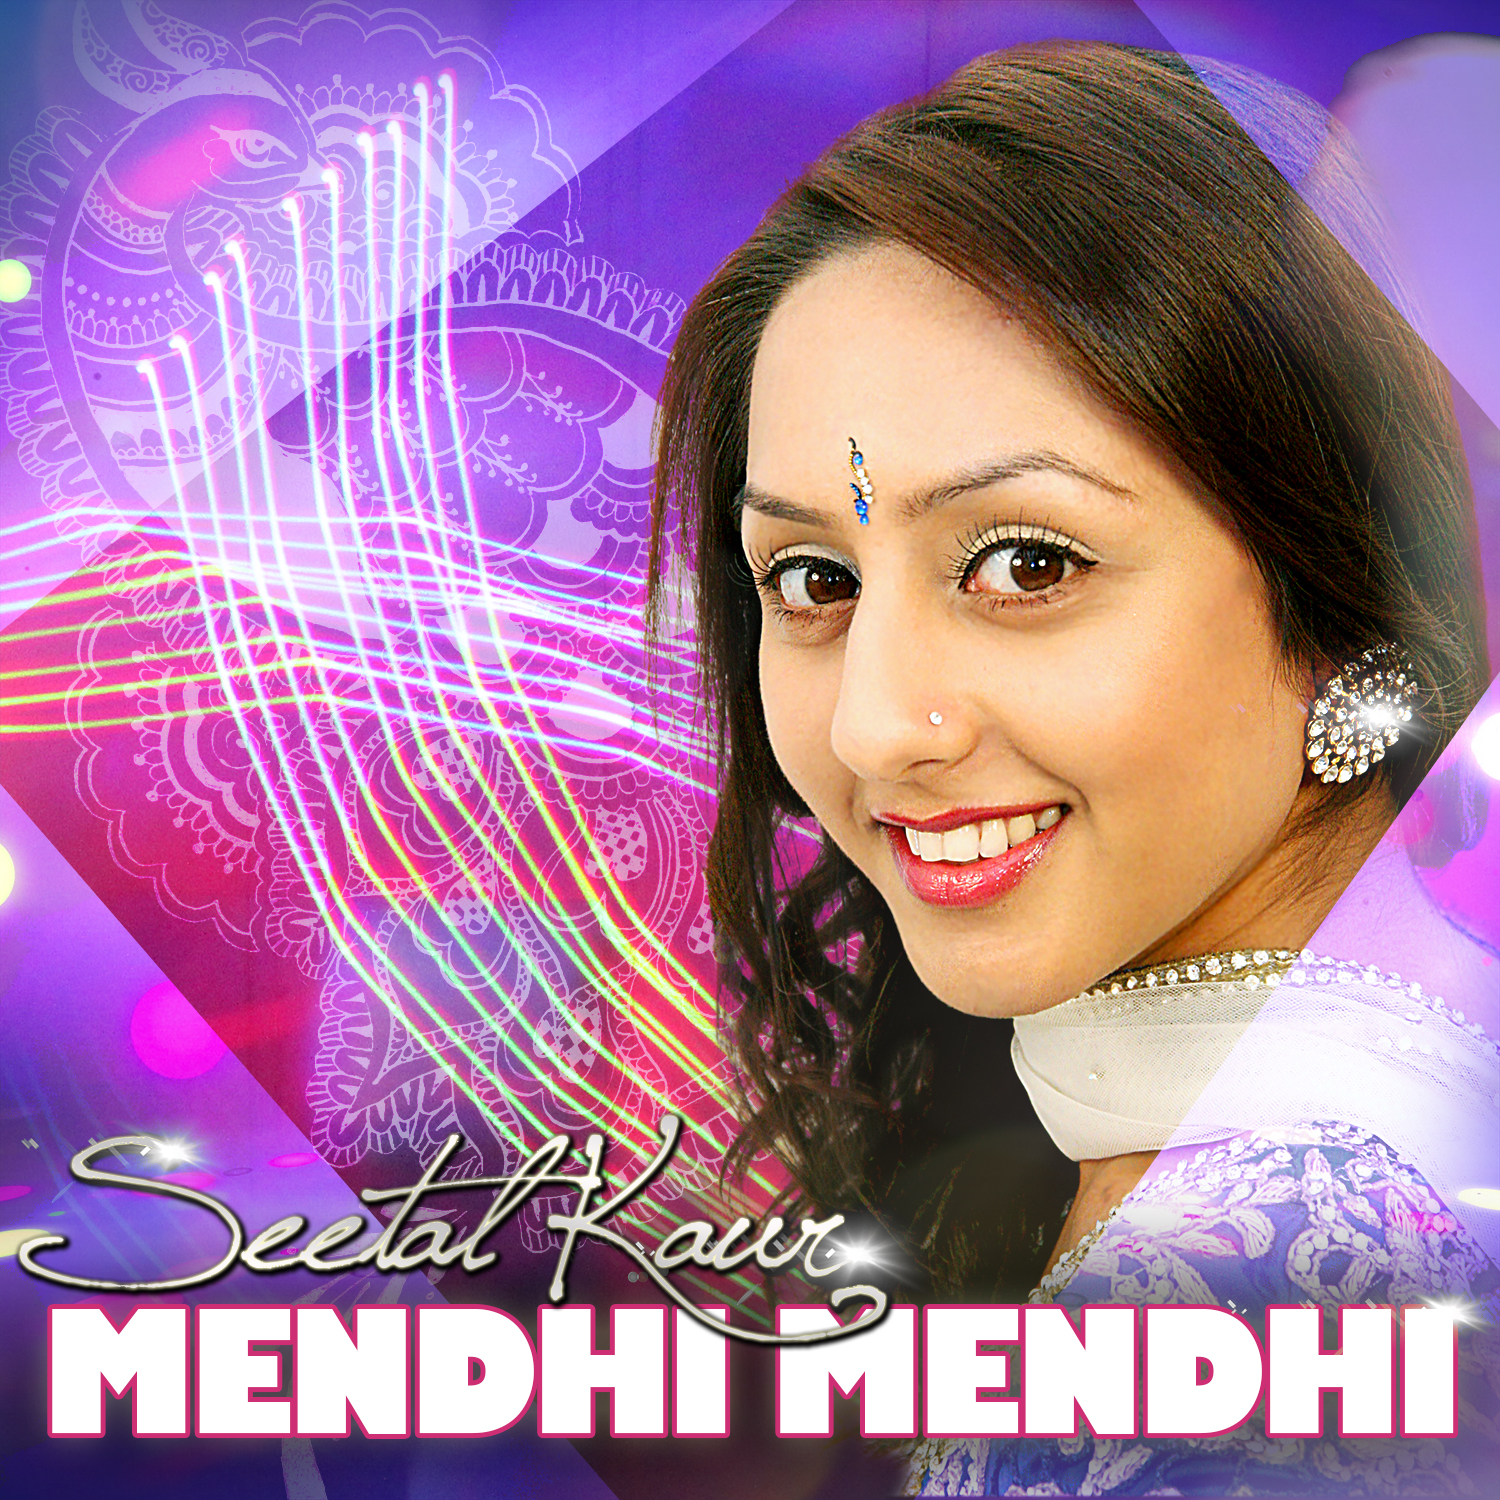 Photo of Seetal Kaur – Mendhi Mendhi (Out Now)